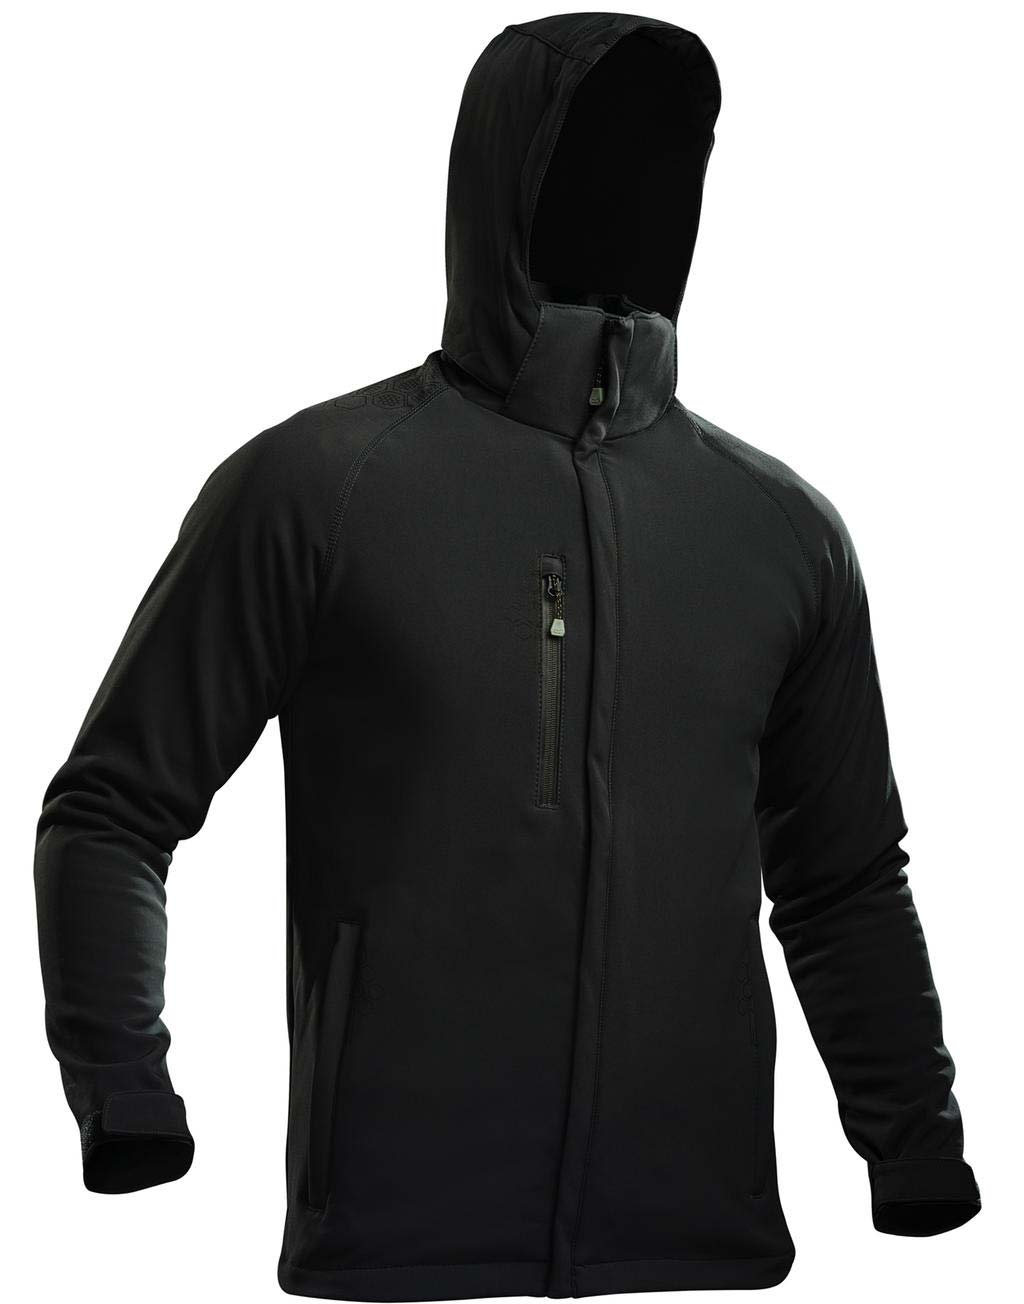 Schwarze Softshell Jacke mit Kapuze